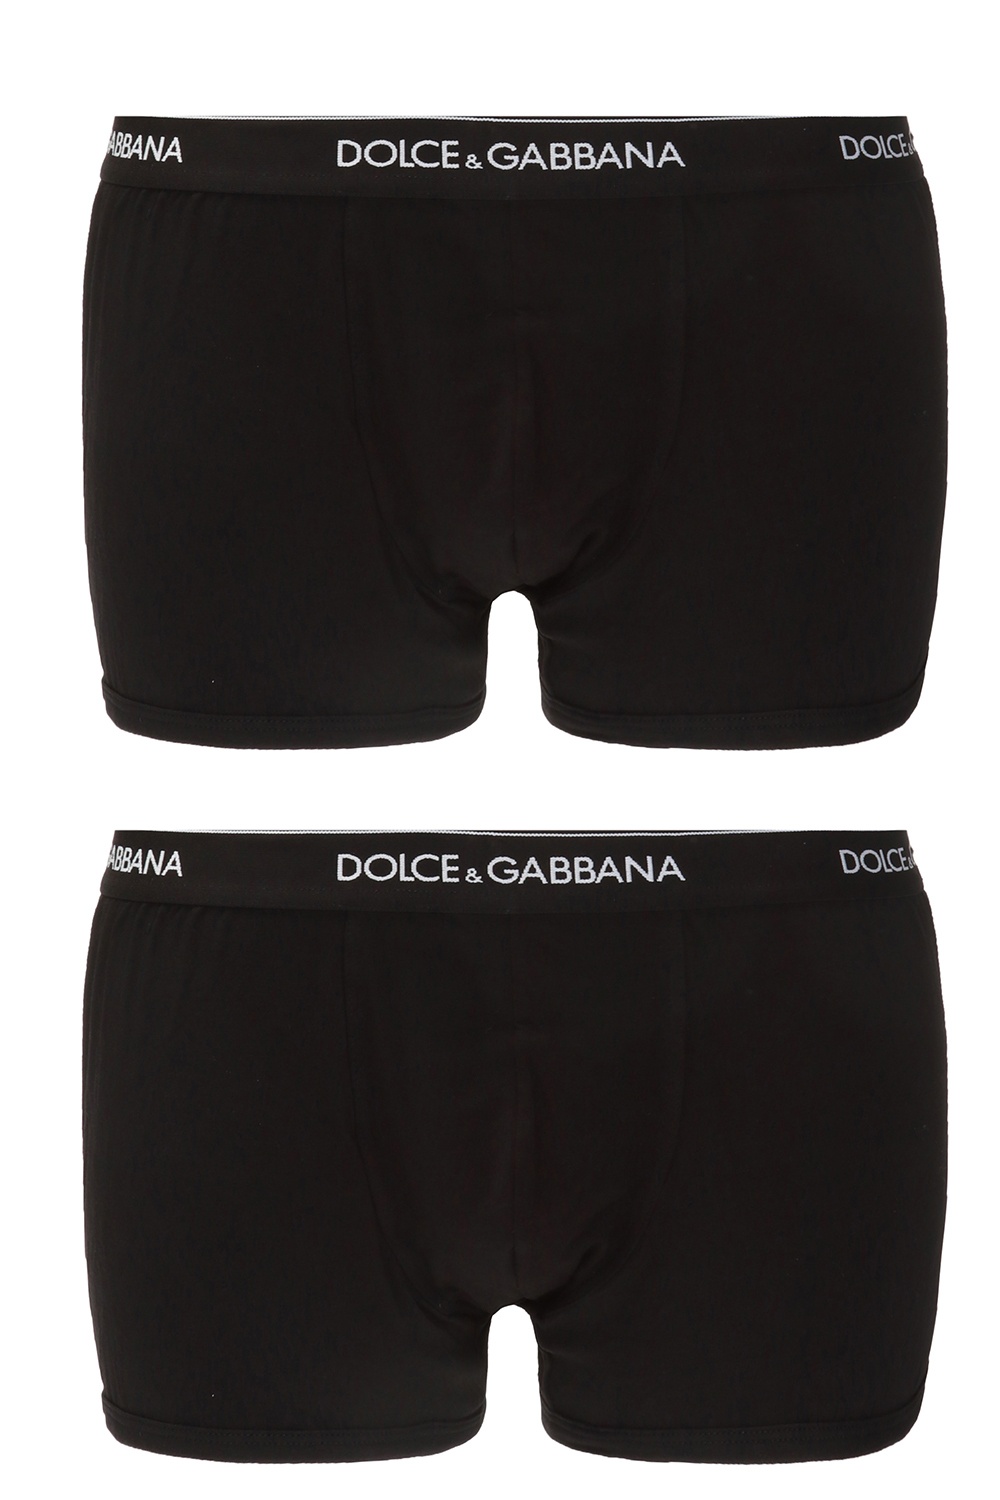 dolce gabbana underwear size chart